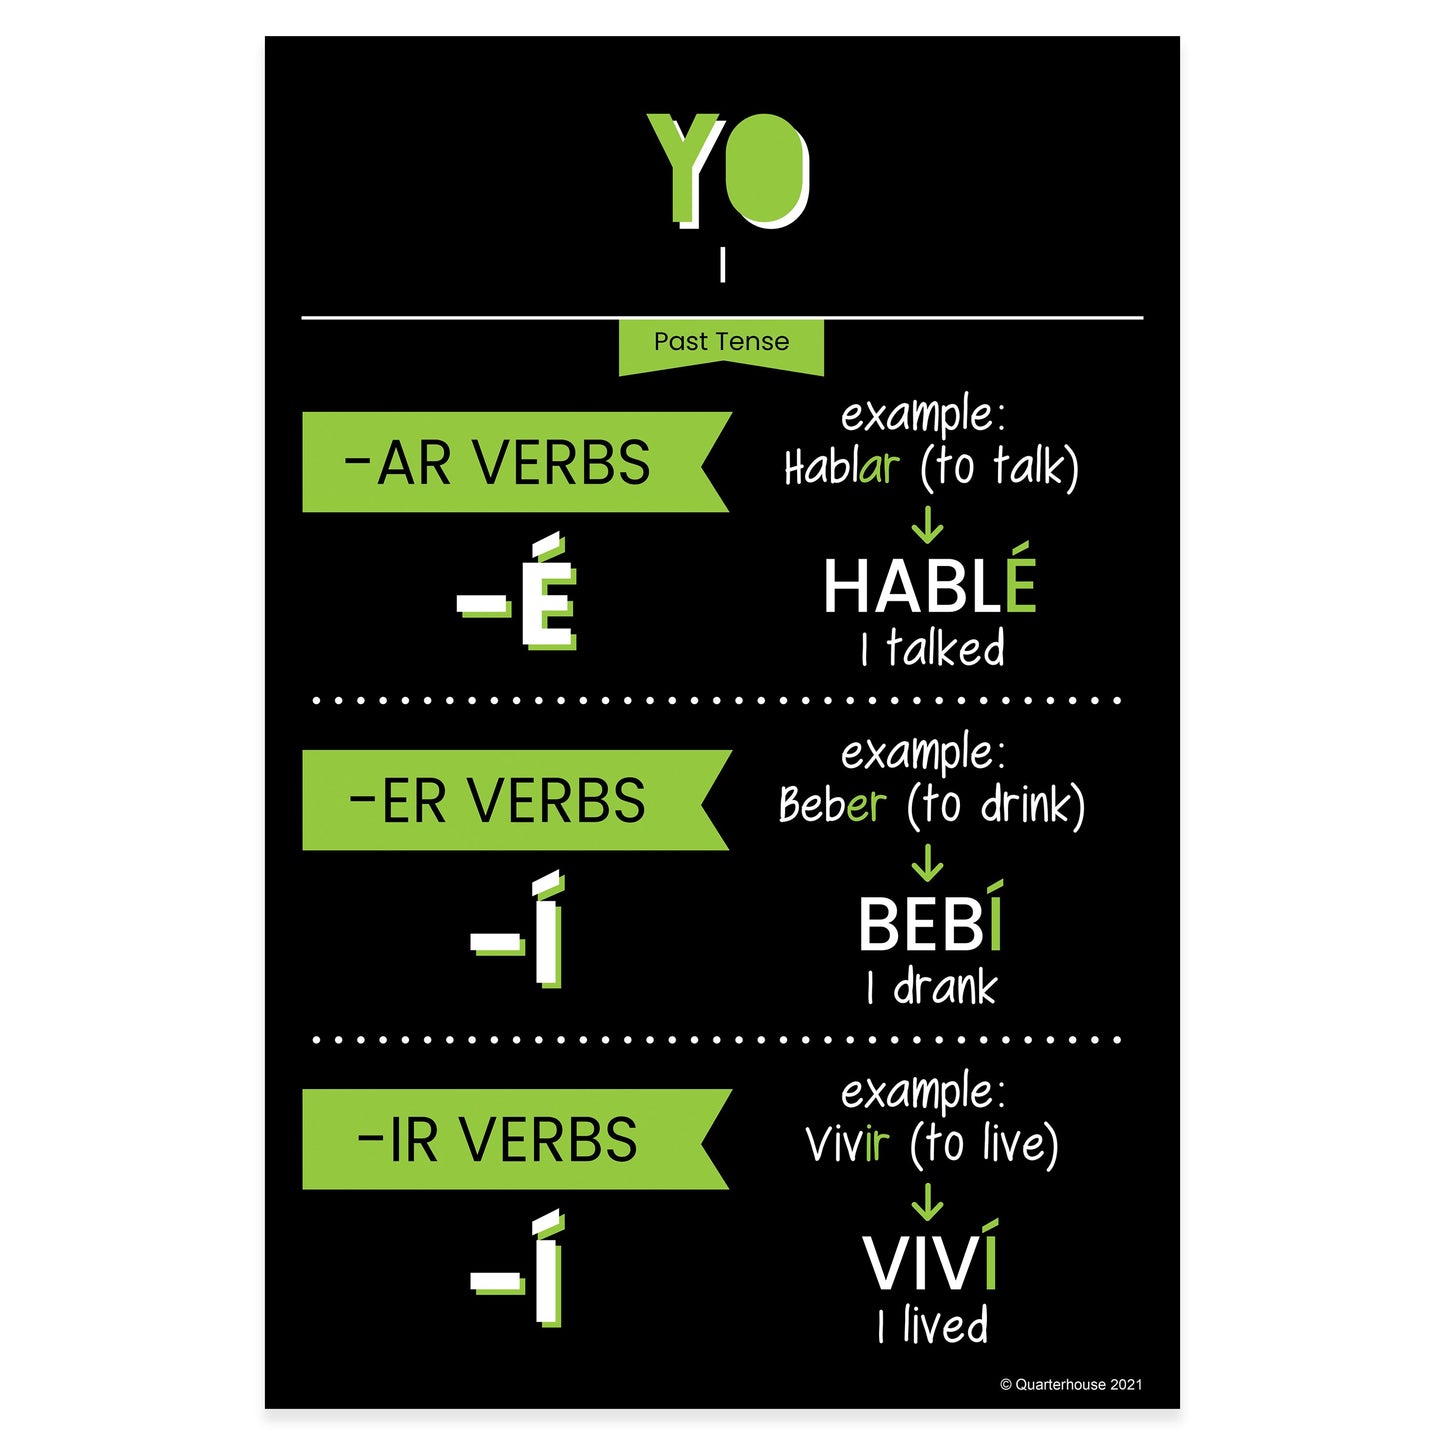 Quarterhouse Yo - Past Tense Spanish Verb Conjugation (Dark-Themed) Poster, Spanish and ESL Classroom Materials for Teachers